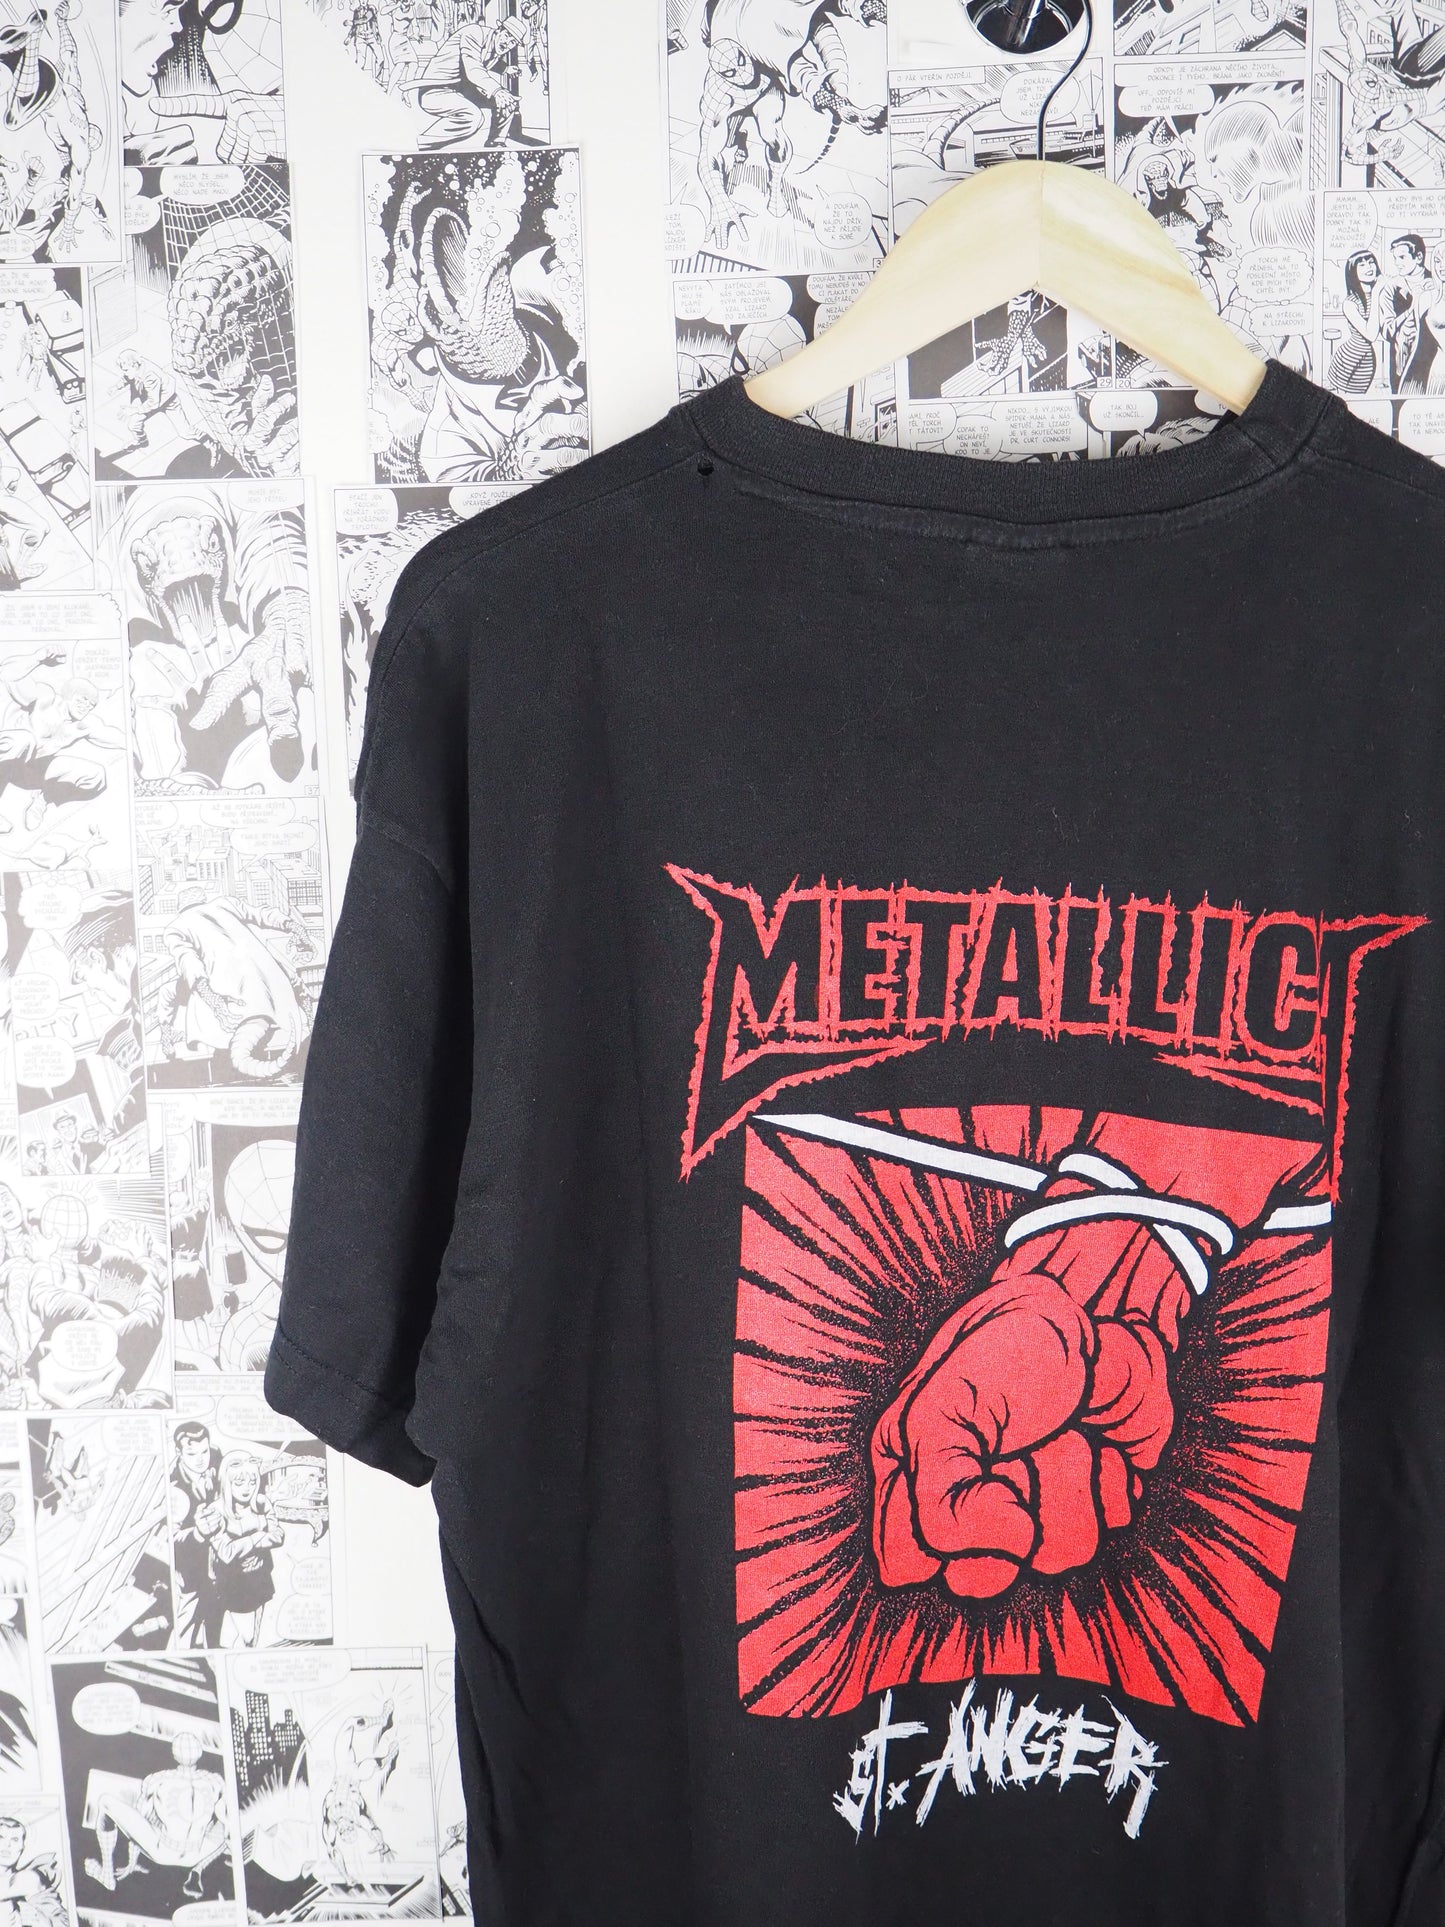 Vintage Metallica "St. Anger" 2003 t-shirt - size XL